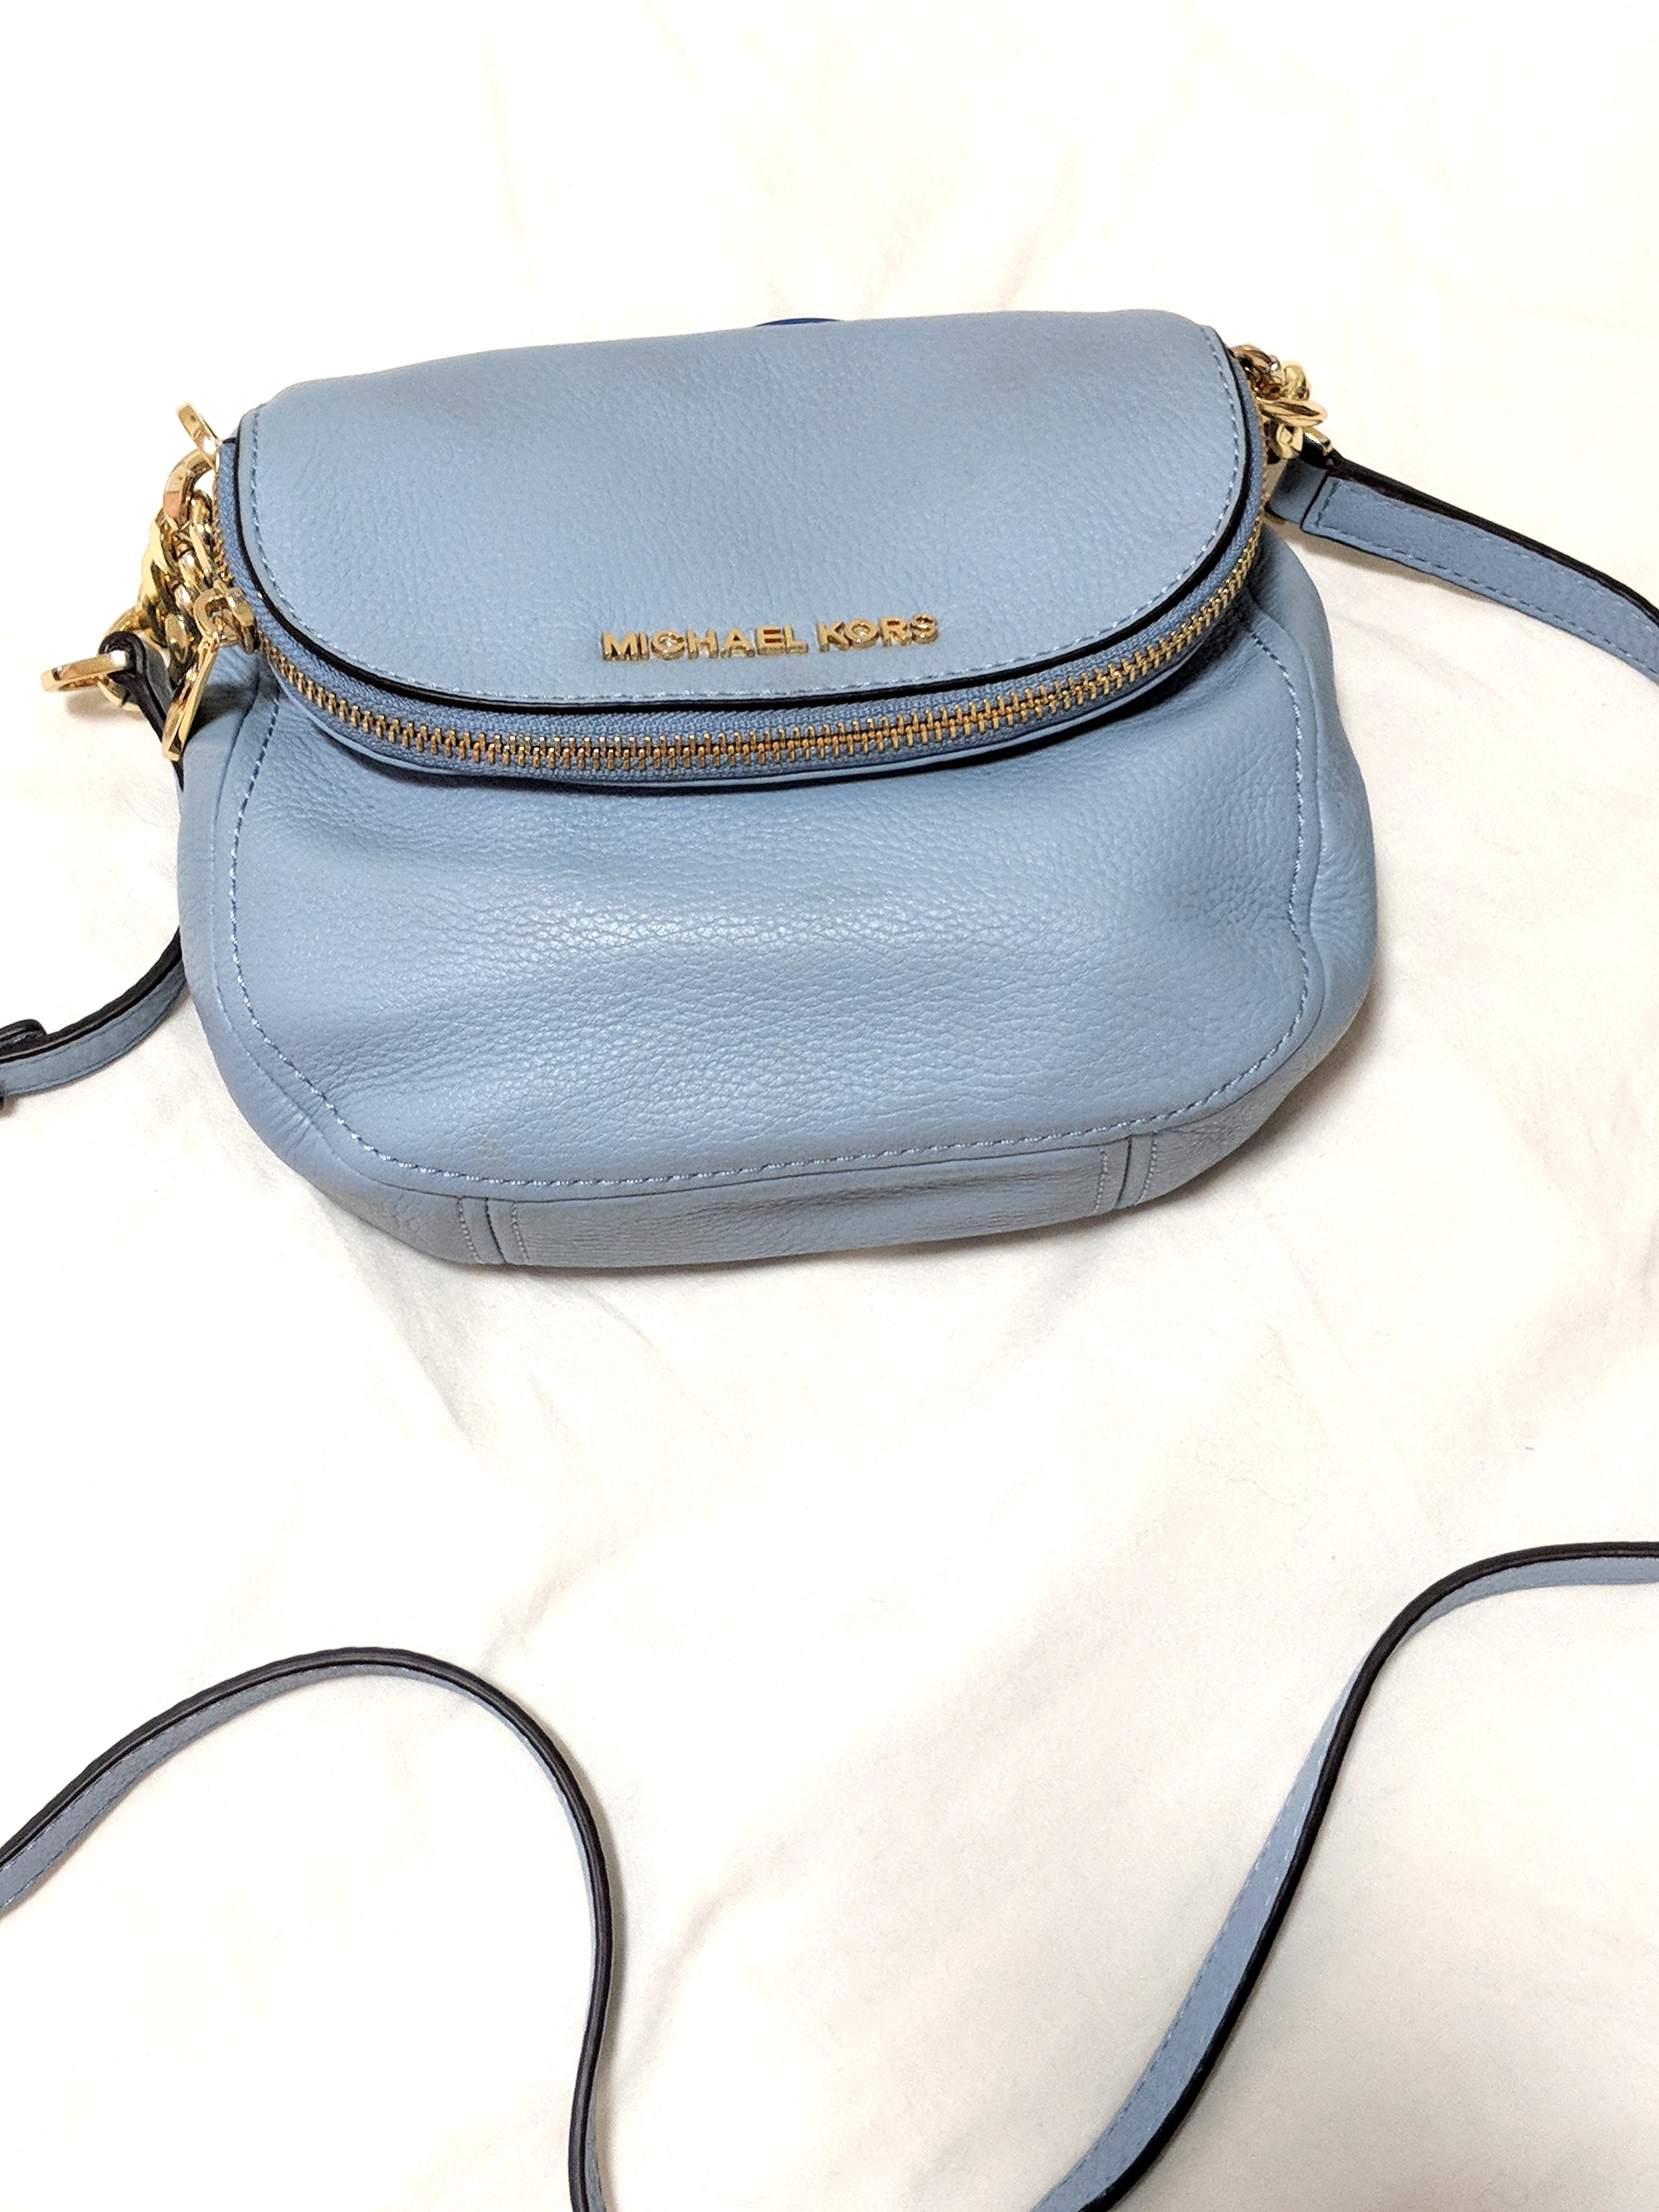 michael kors baby blue purse